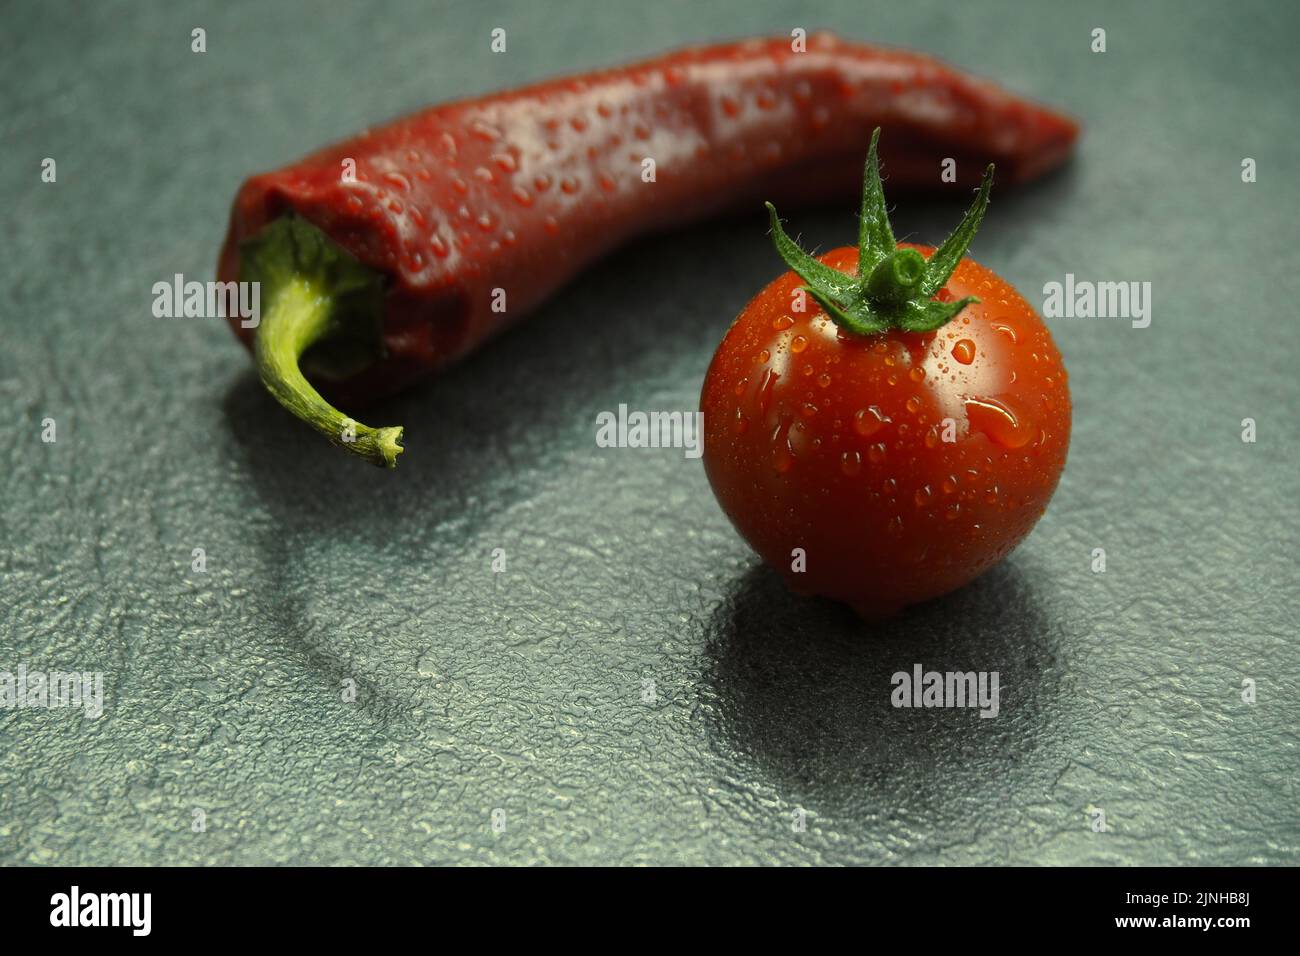 Little tomato and chili pepper. Stock Photo